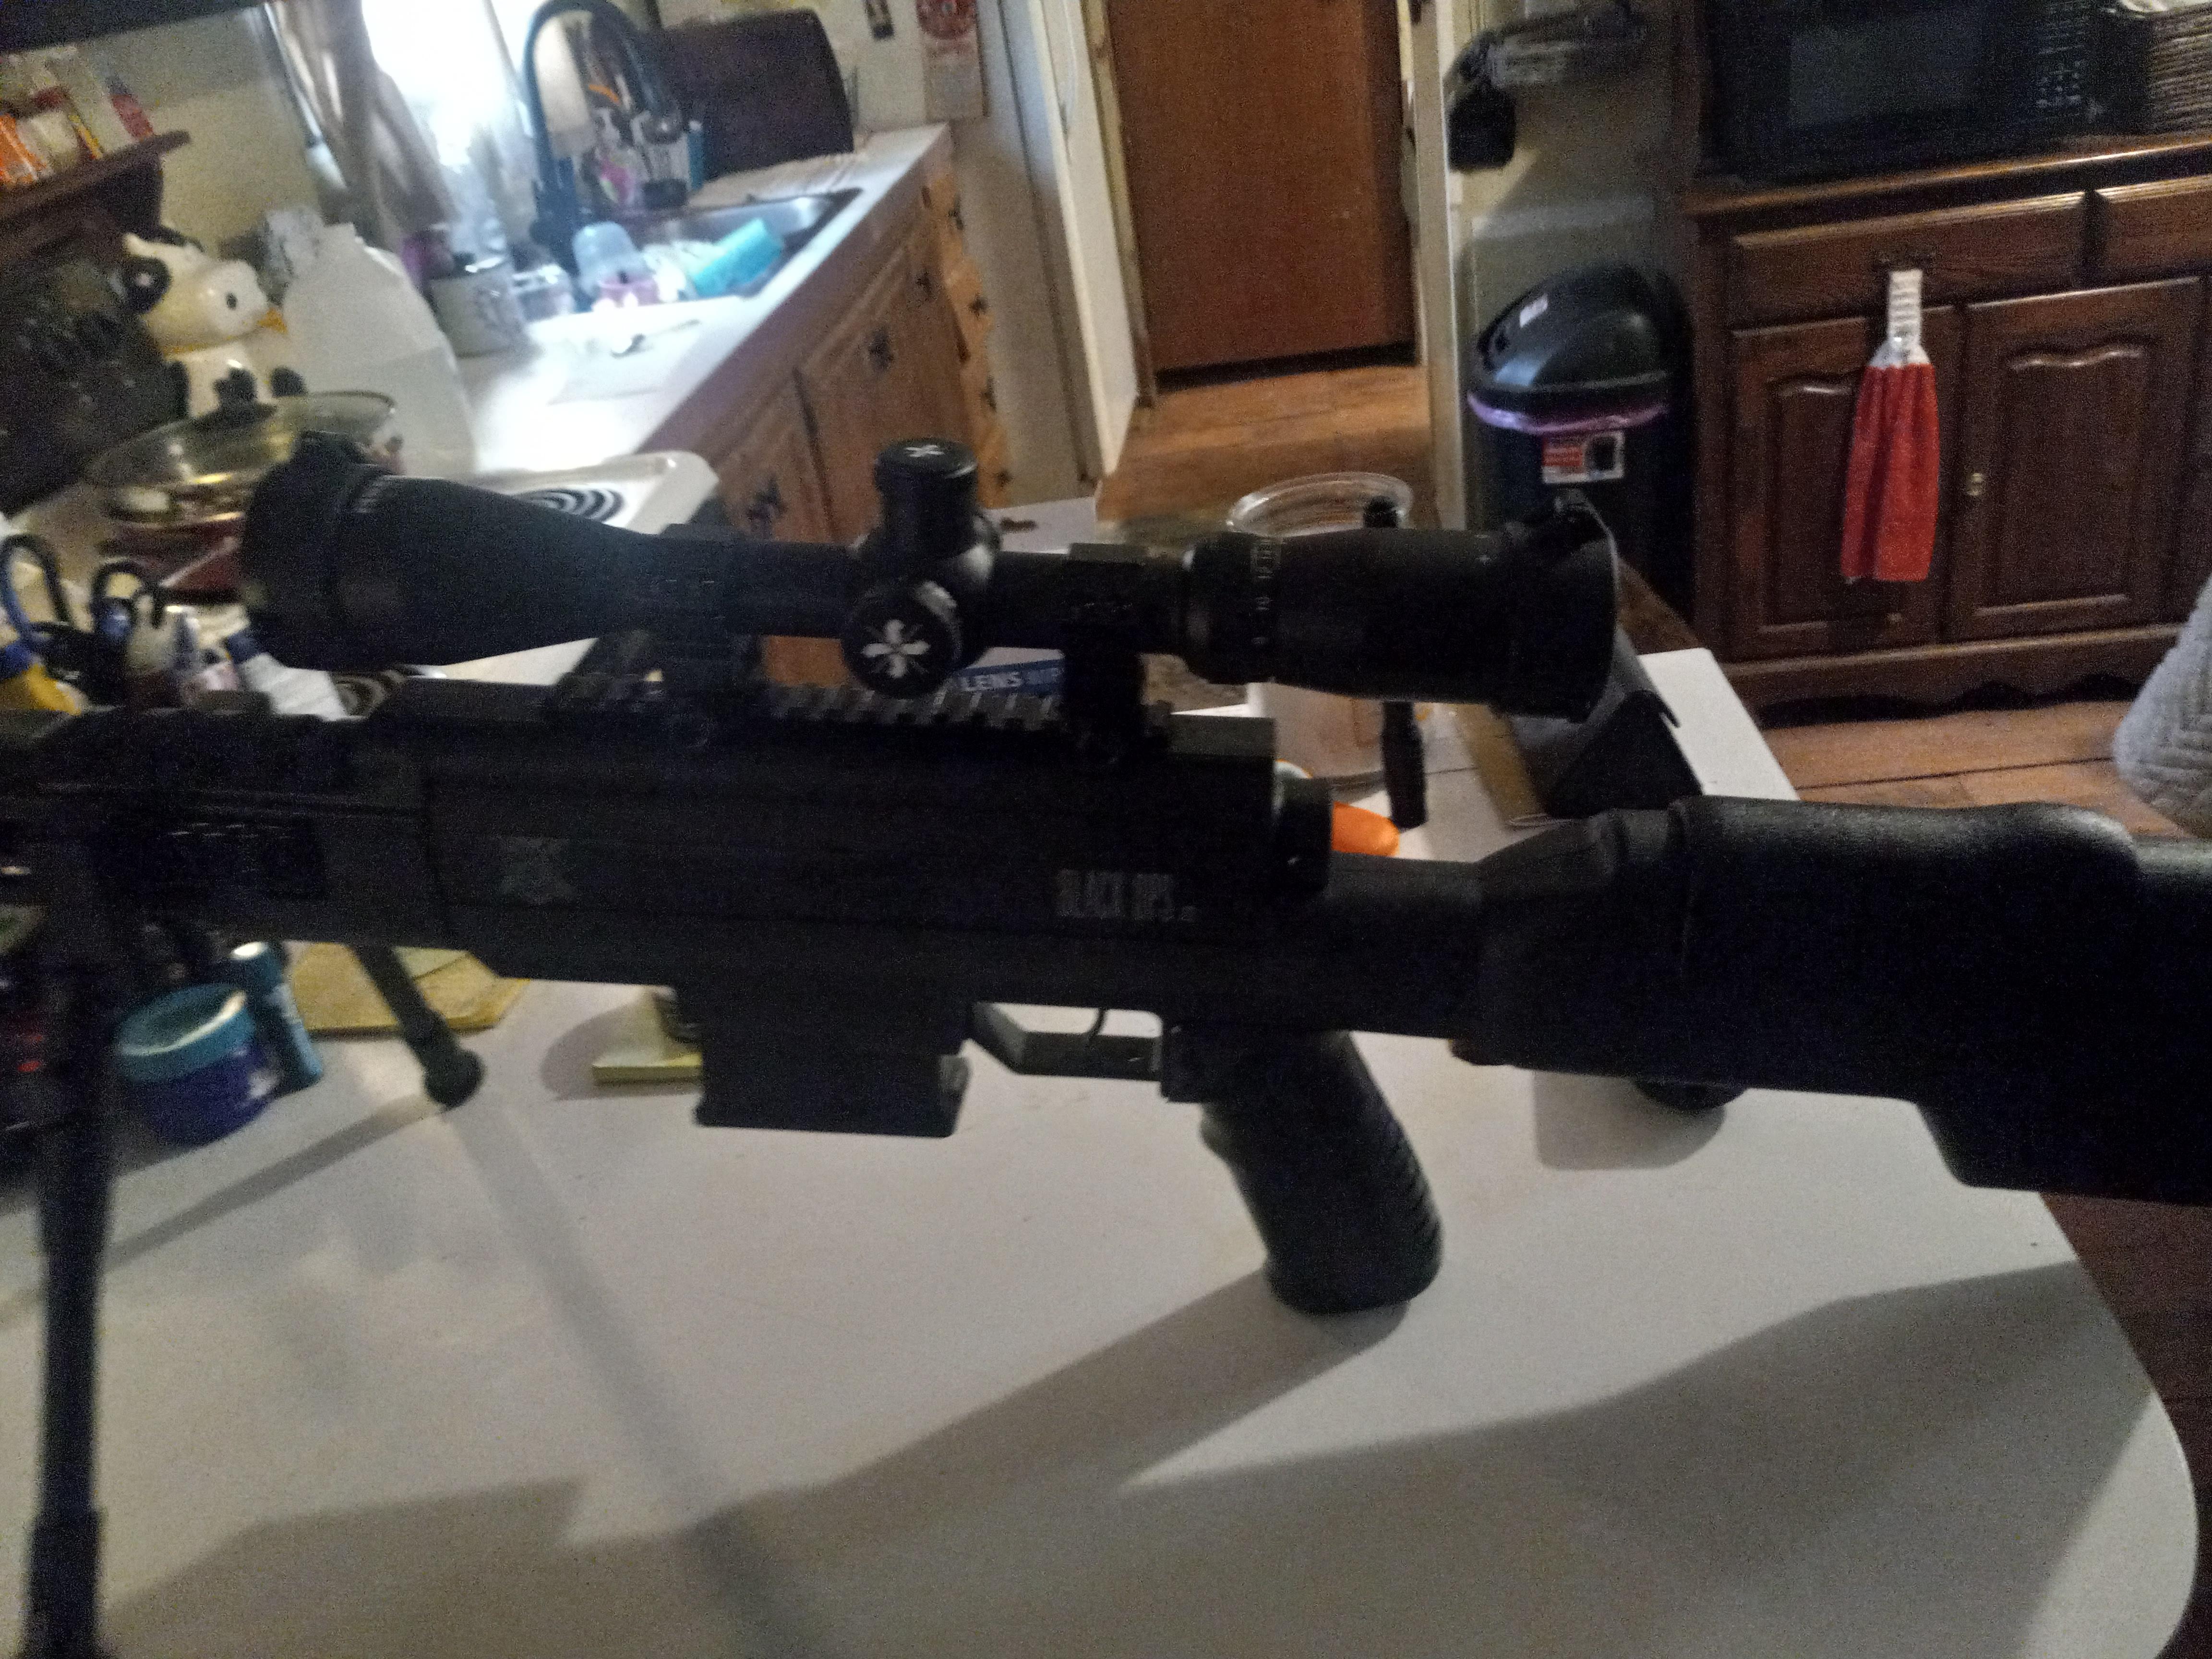 Black Ops .22 Sniper Rifle S (Nitro Piston) .22 - Black Ops USA